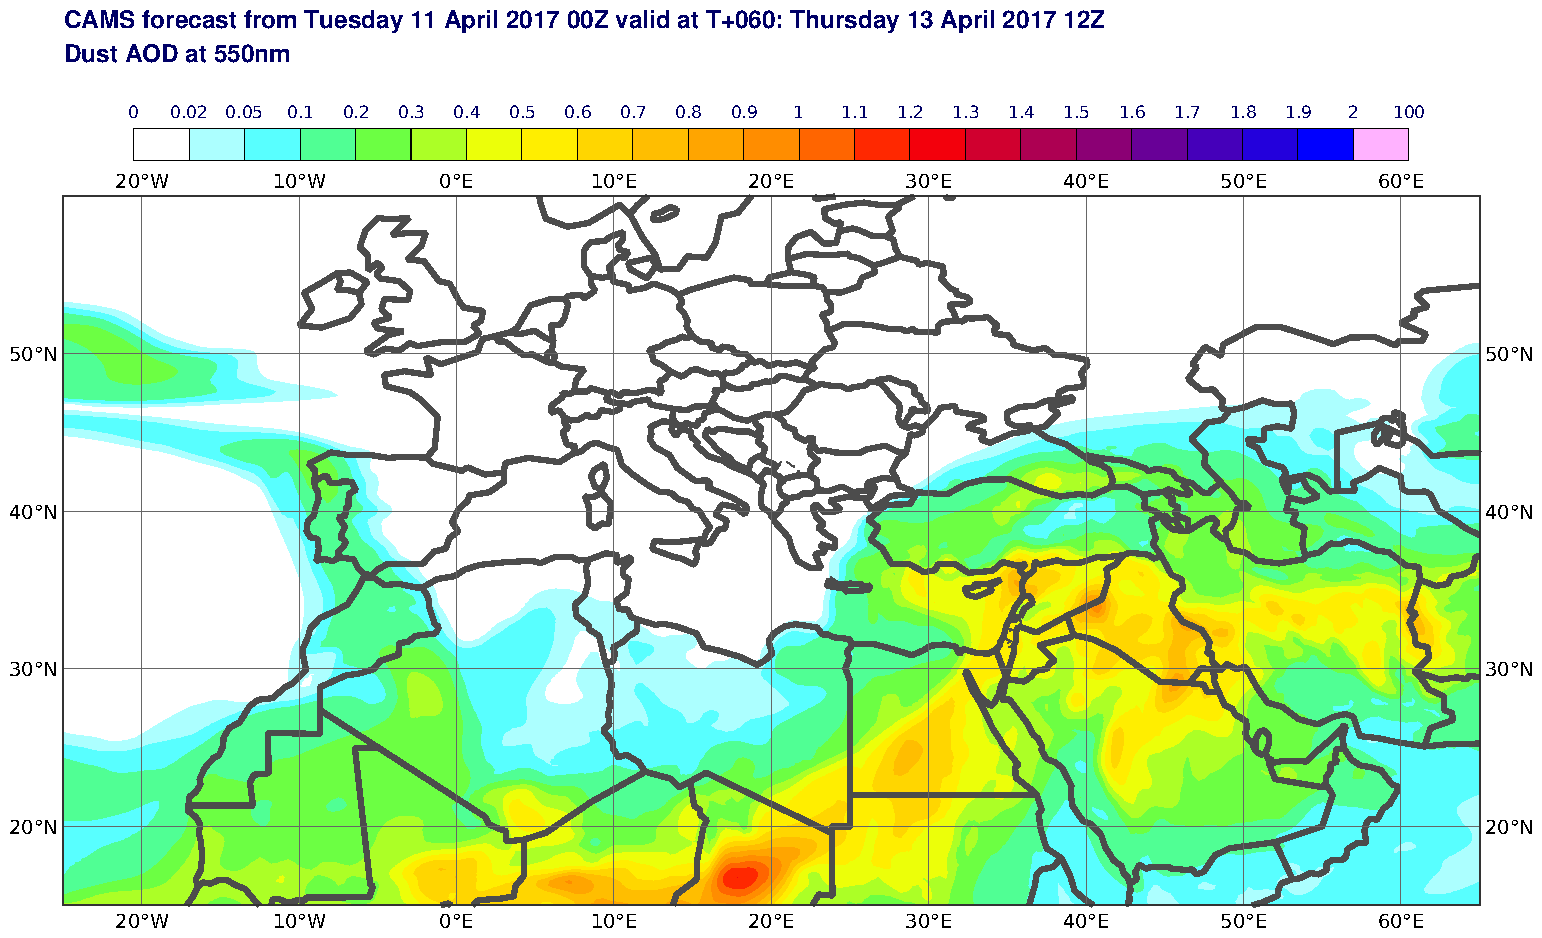 Dust AOD at 550nm valid at T60 - 2017-04-13 12:00